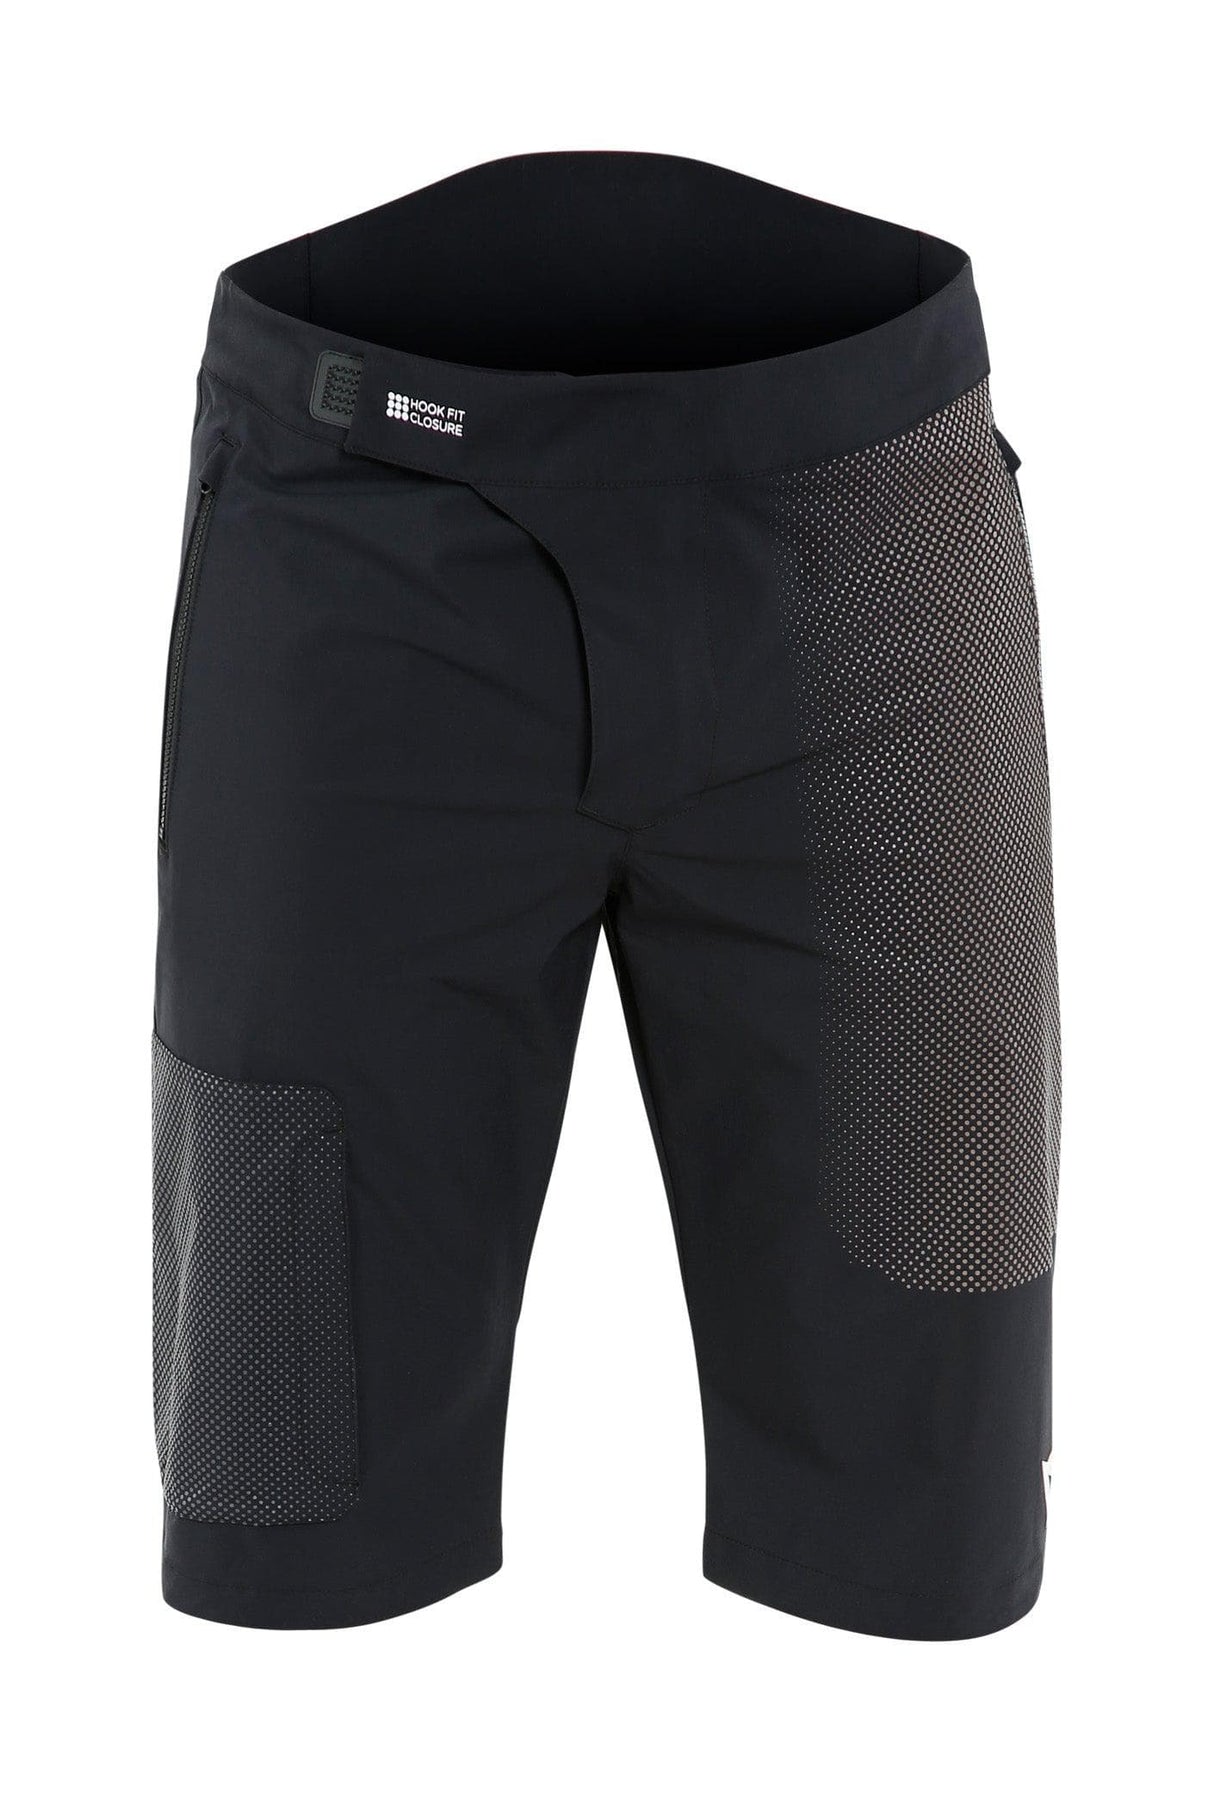 Dainese HG Gryfino Shorts (Black, Dark Grey, L)